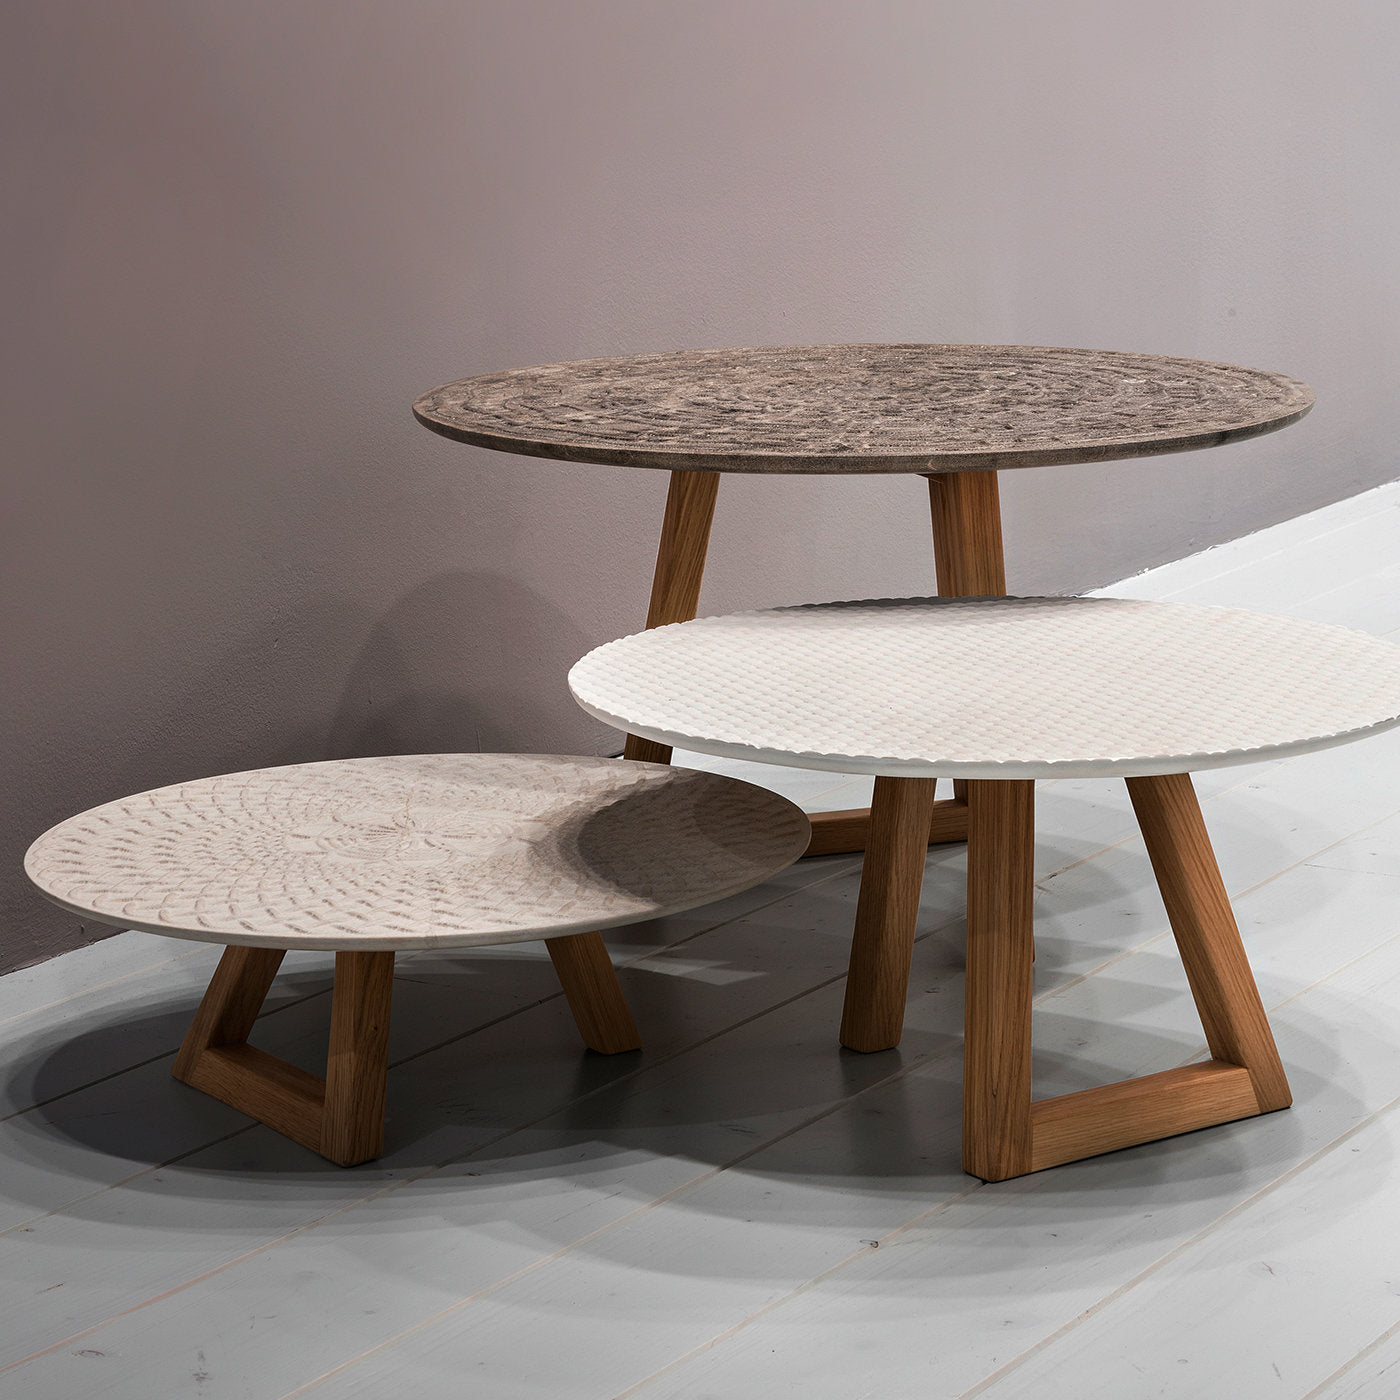 Tavoli Nichi Nesting Tables Set of 3 by Marella Ferrera - Alternative view 1